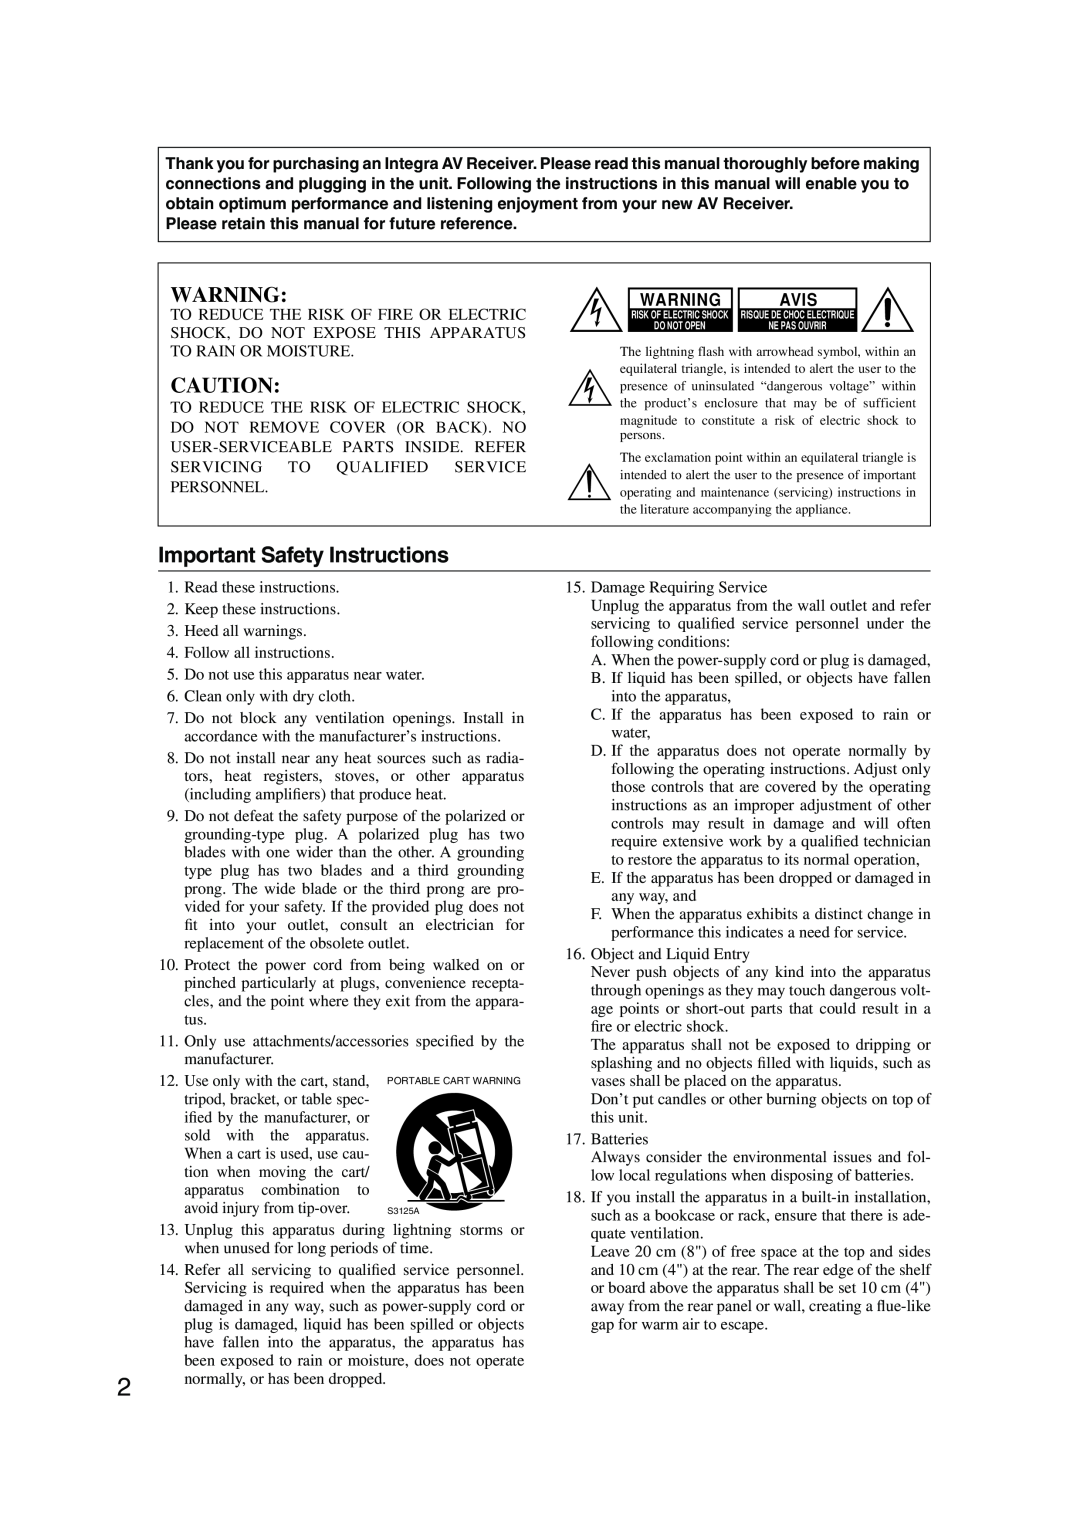 Integra DTR-7.8 instruction manual Important Safety Instructions, Avis 